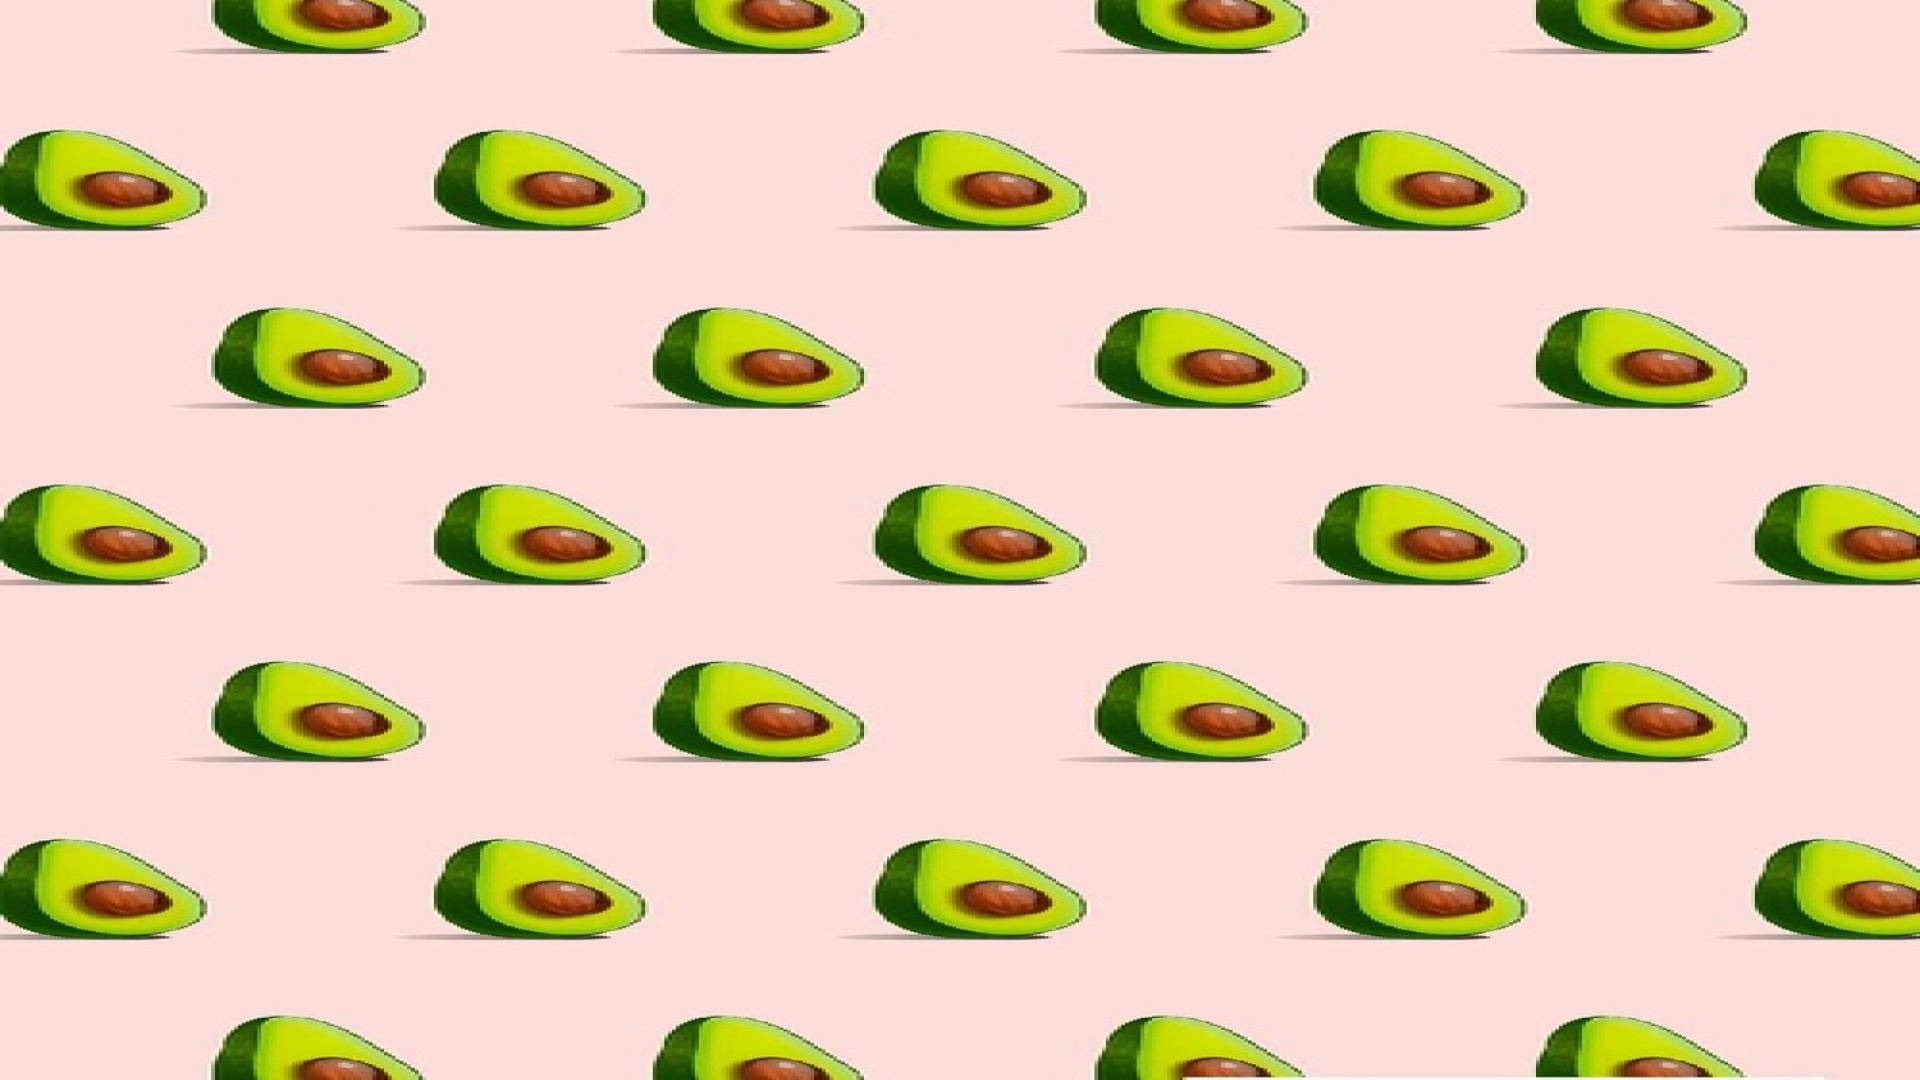 Minimalist Avocado Fruit Horizontal Patterns Digital Art Wallpaper